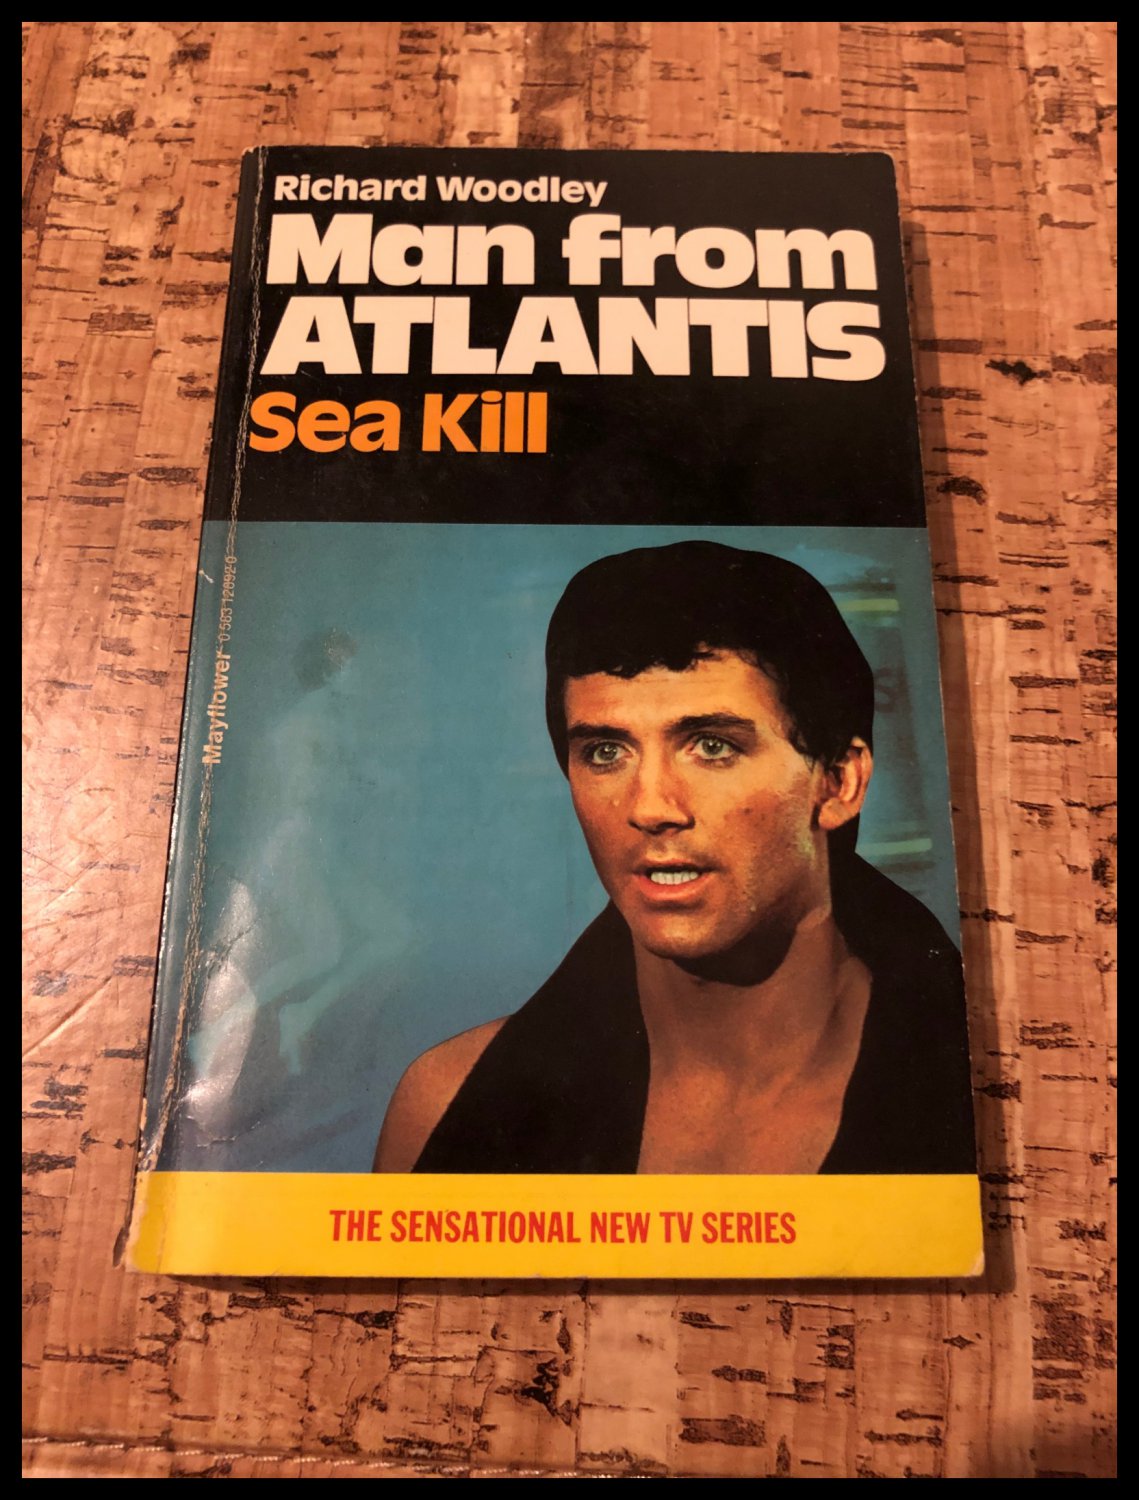 Man from Atlantis - Sea Kill by Richard Woodley 1977 Granada